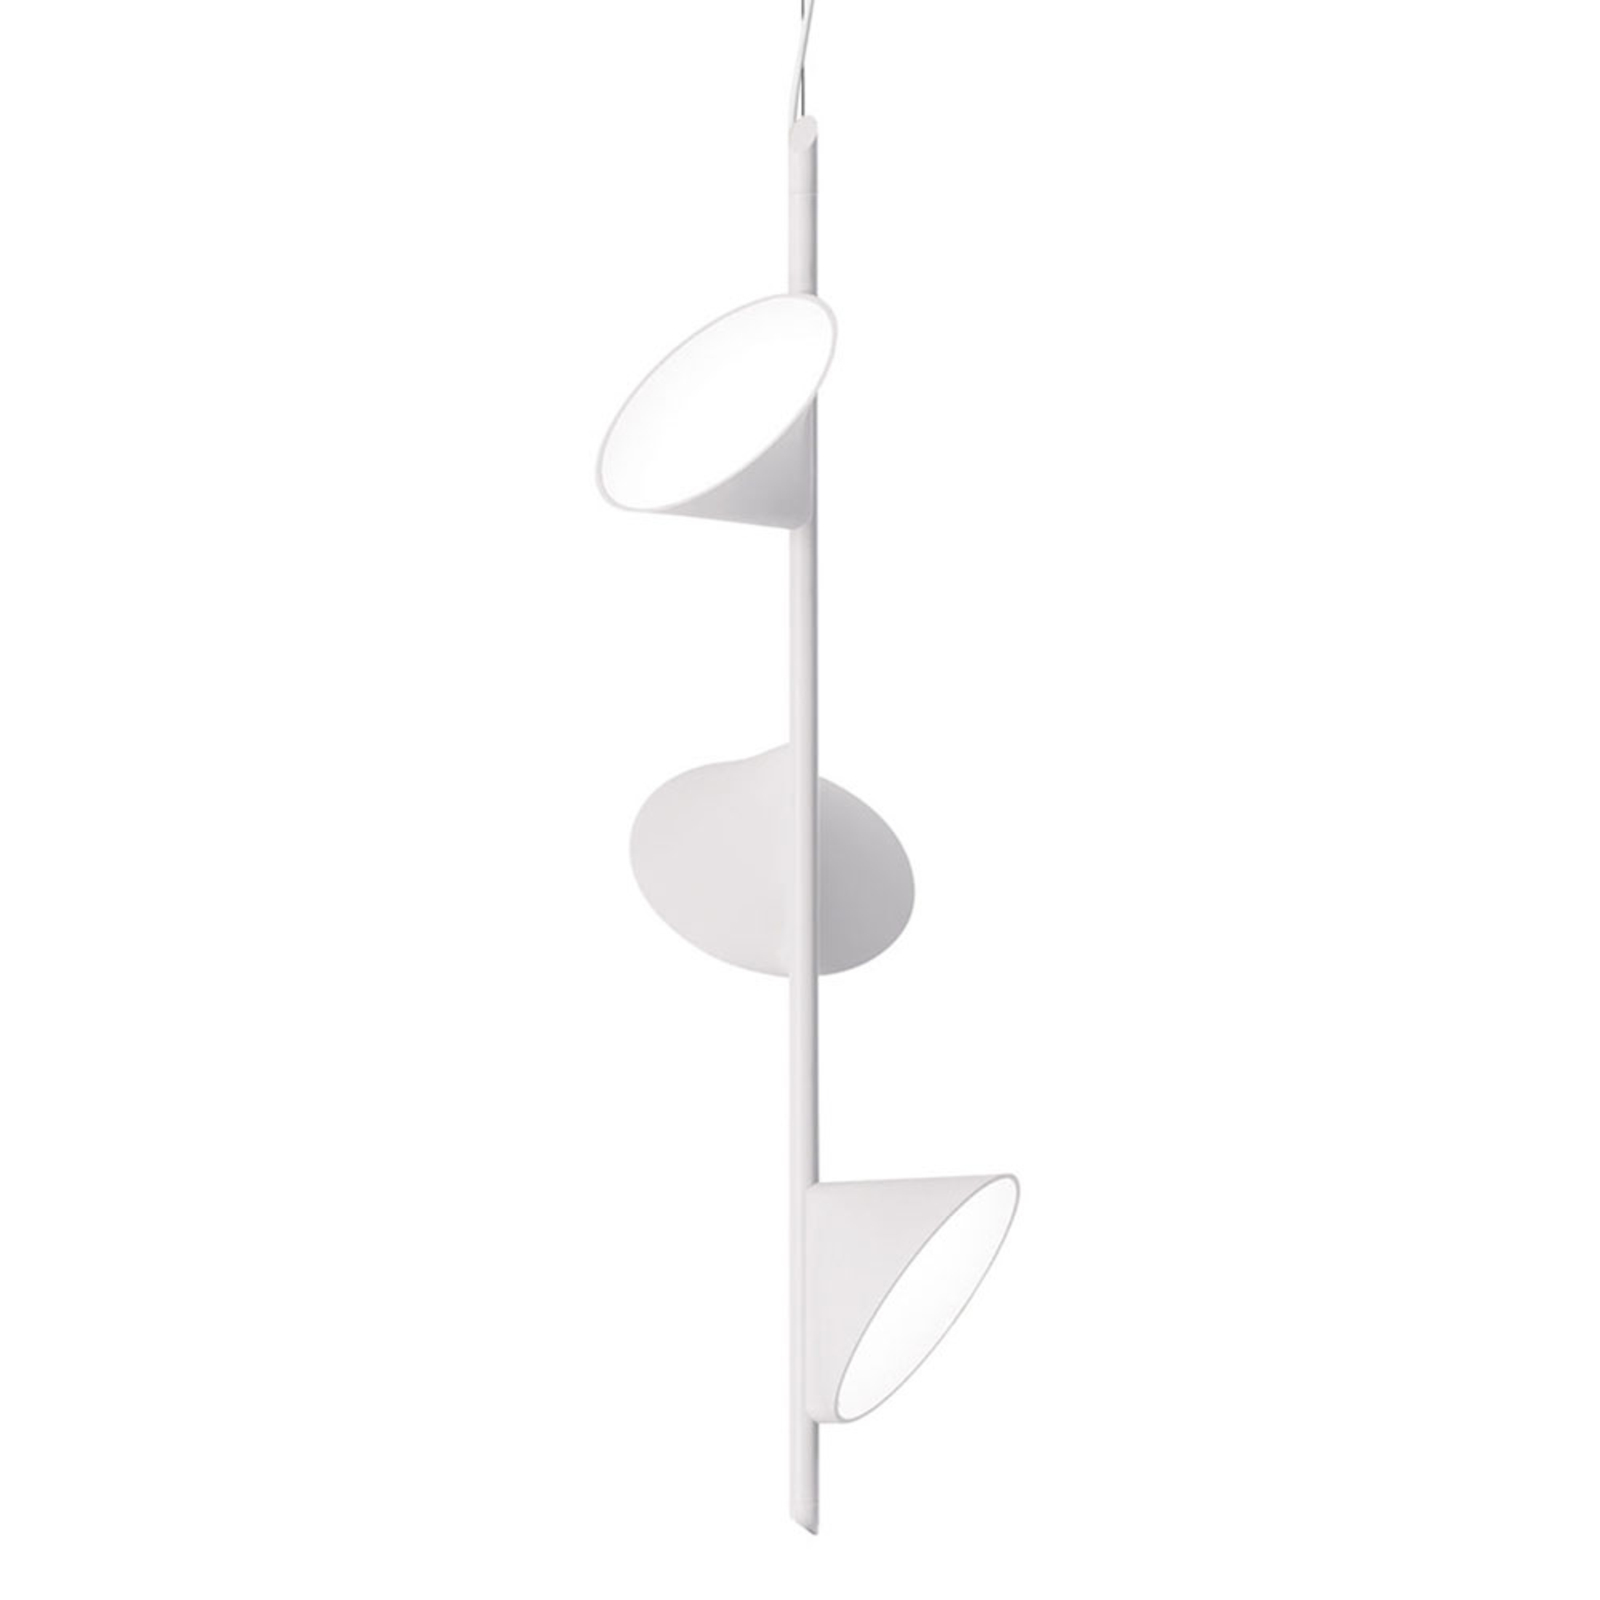 Axolight Orchid LED pendant light, 3-bulb white